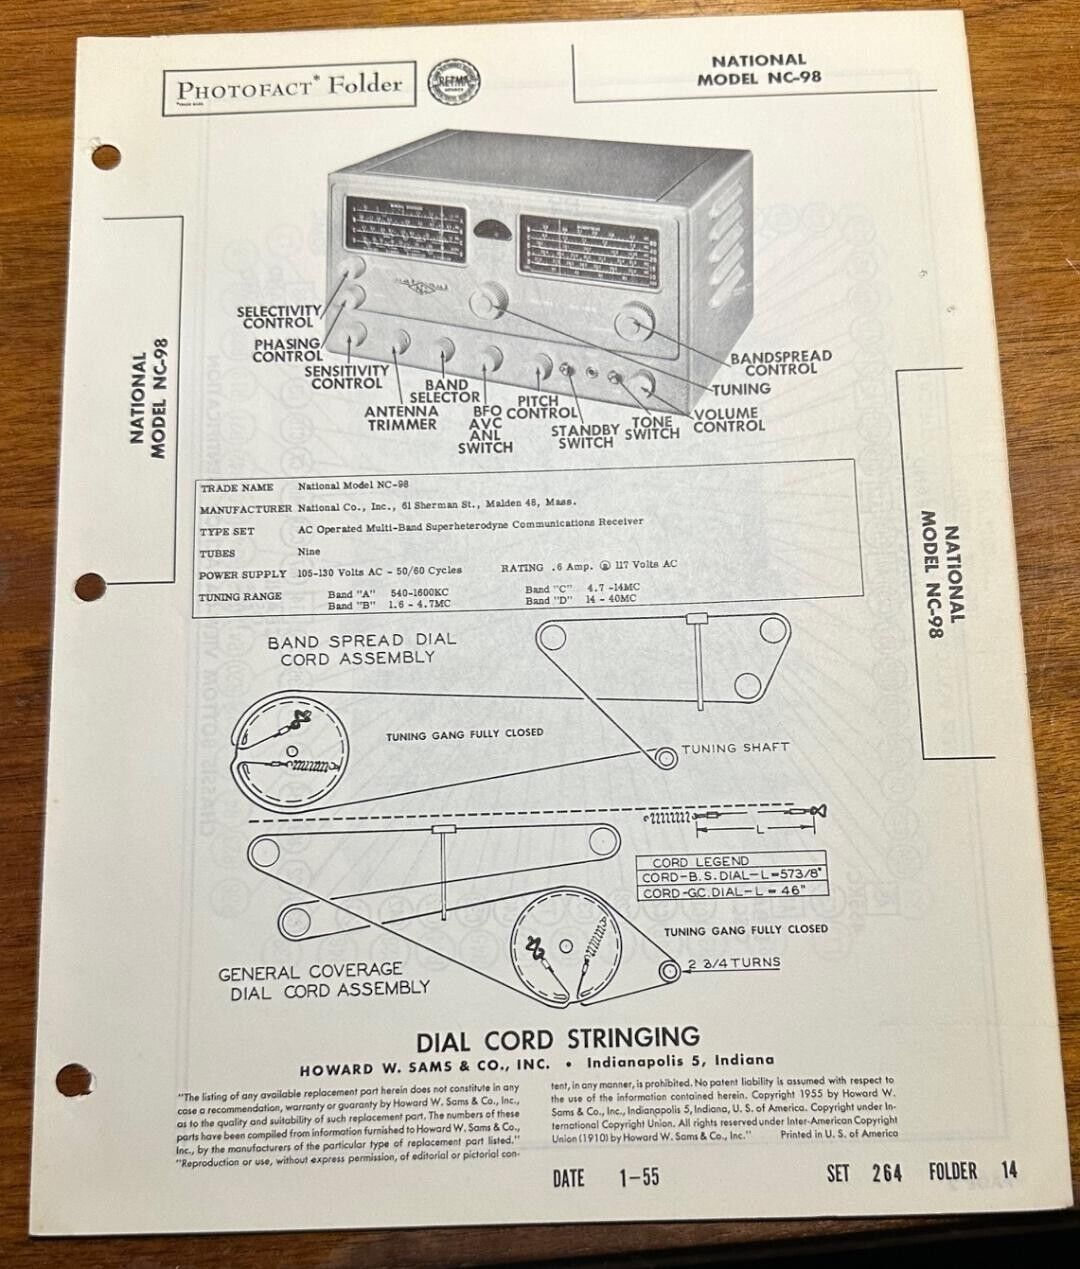 1955 National NC-98 Radio Photofact Service Manual Foldout Folder